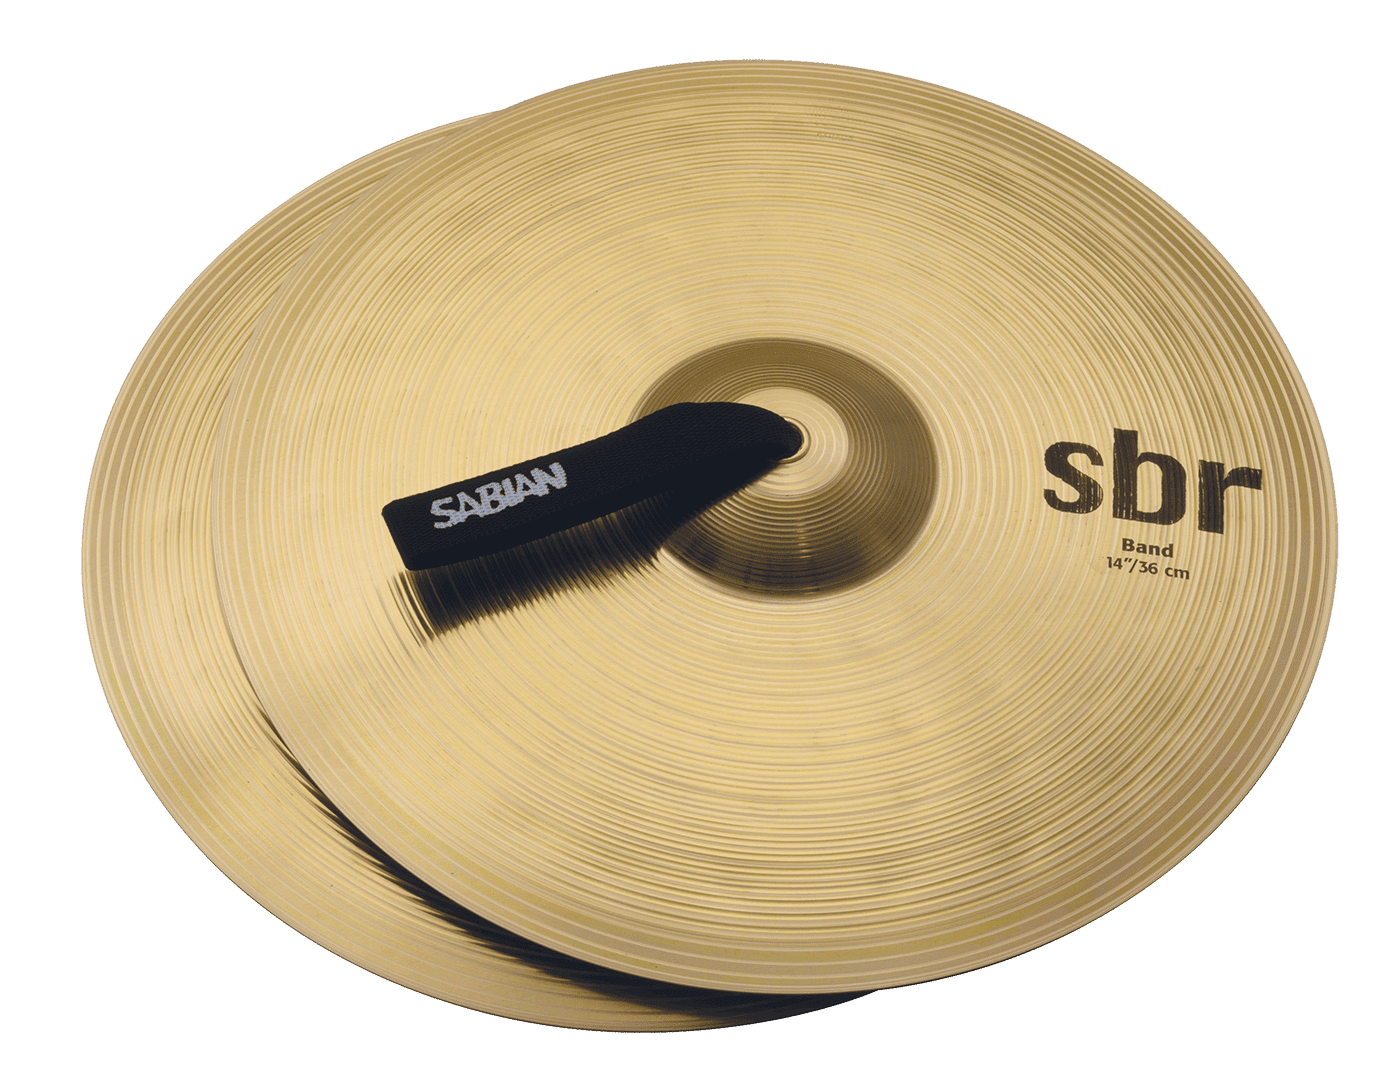 Sabian 14" SBR Concert Band Cymbals - Pair